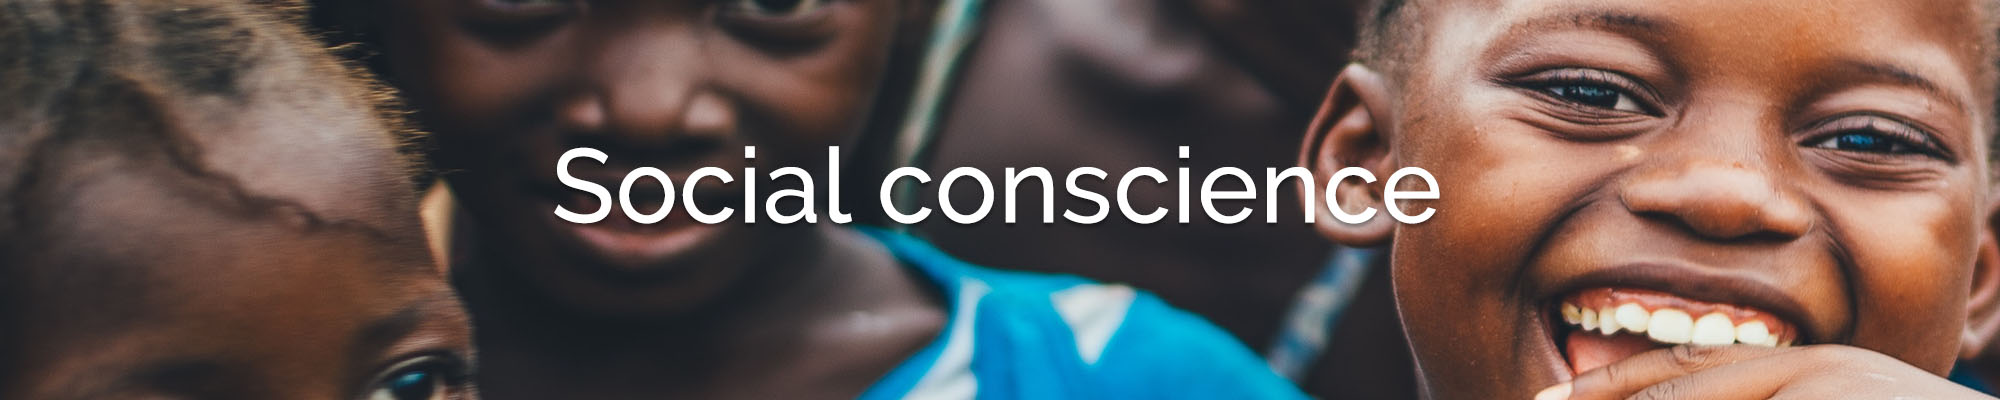 social conscience africa